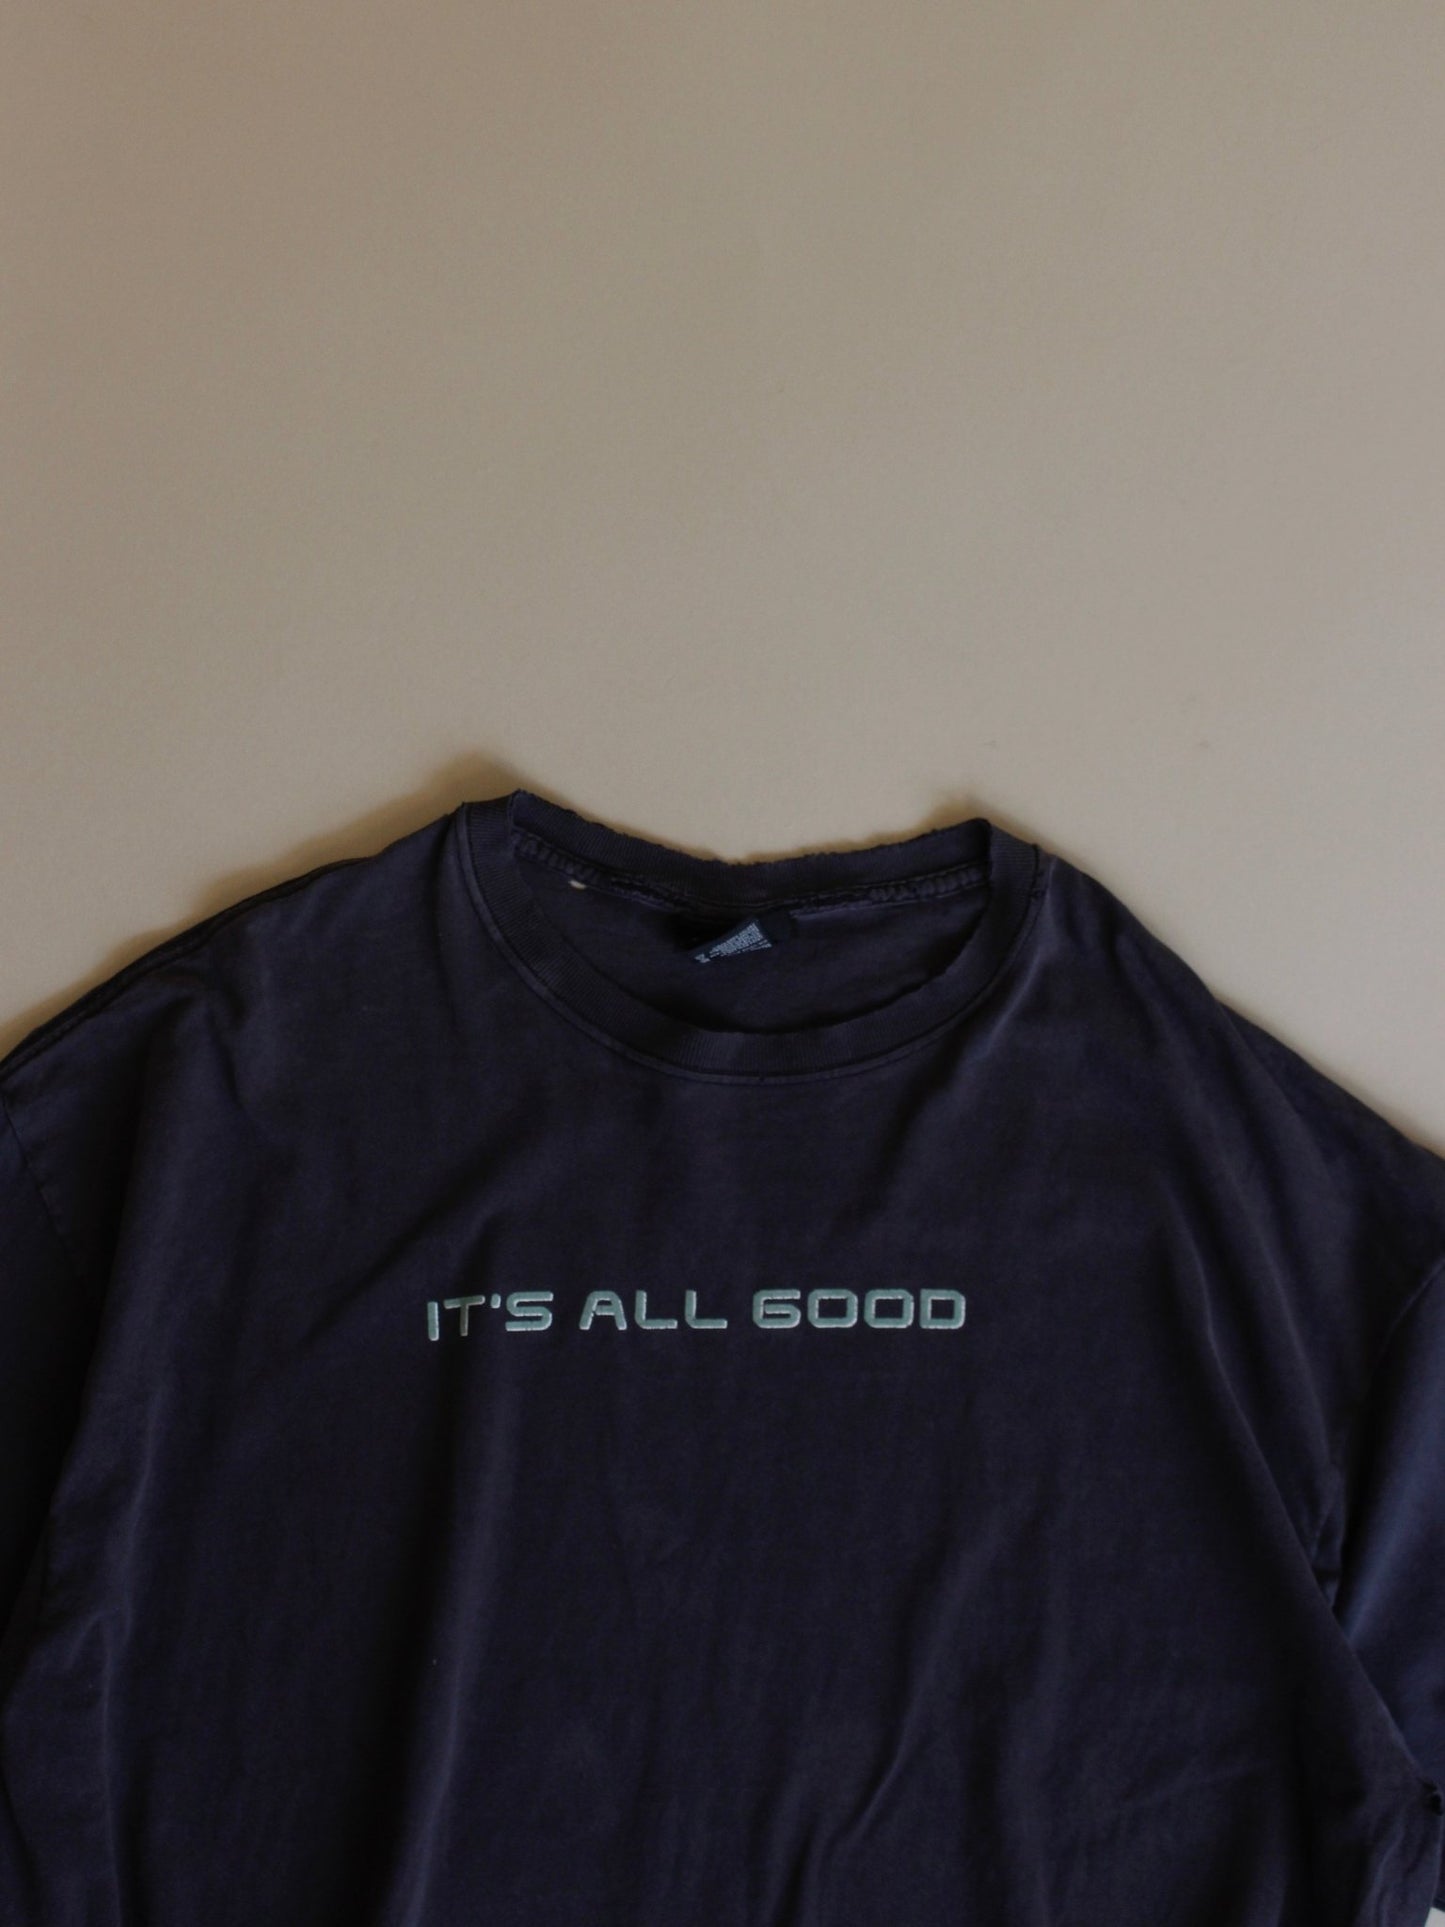 1990s “It’s All Good” Tee